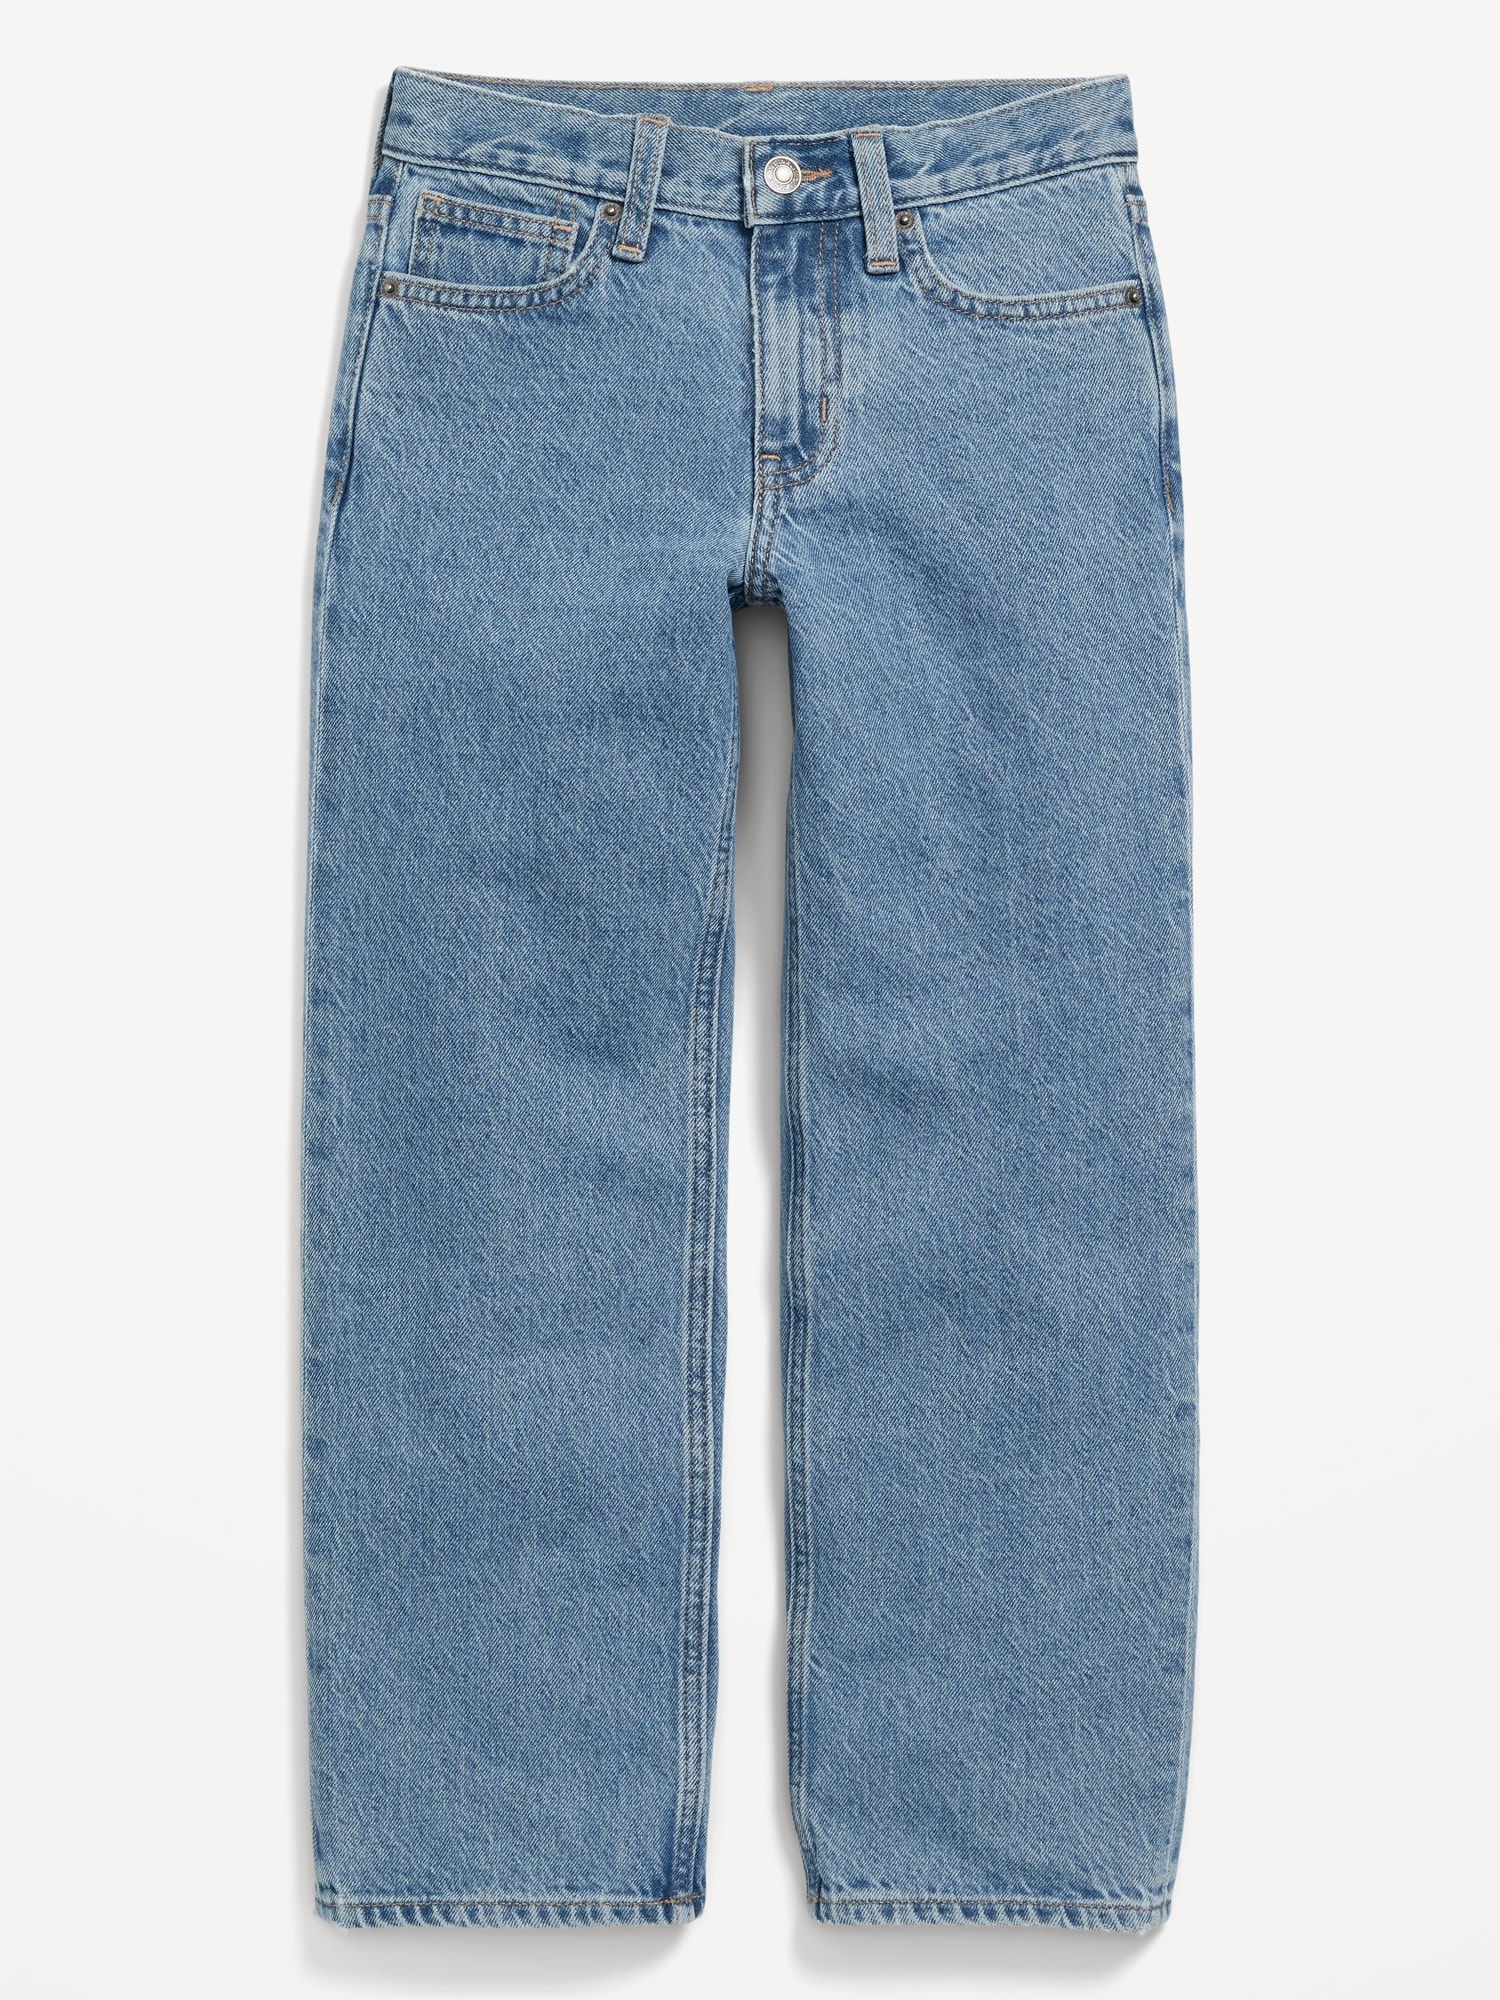 Boys Zipper Jeans